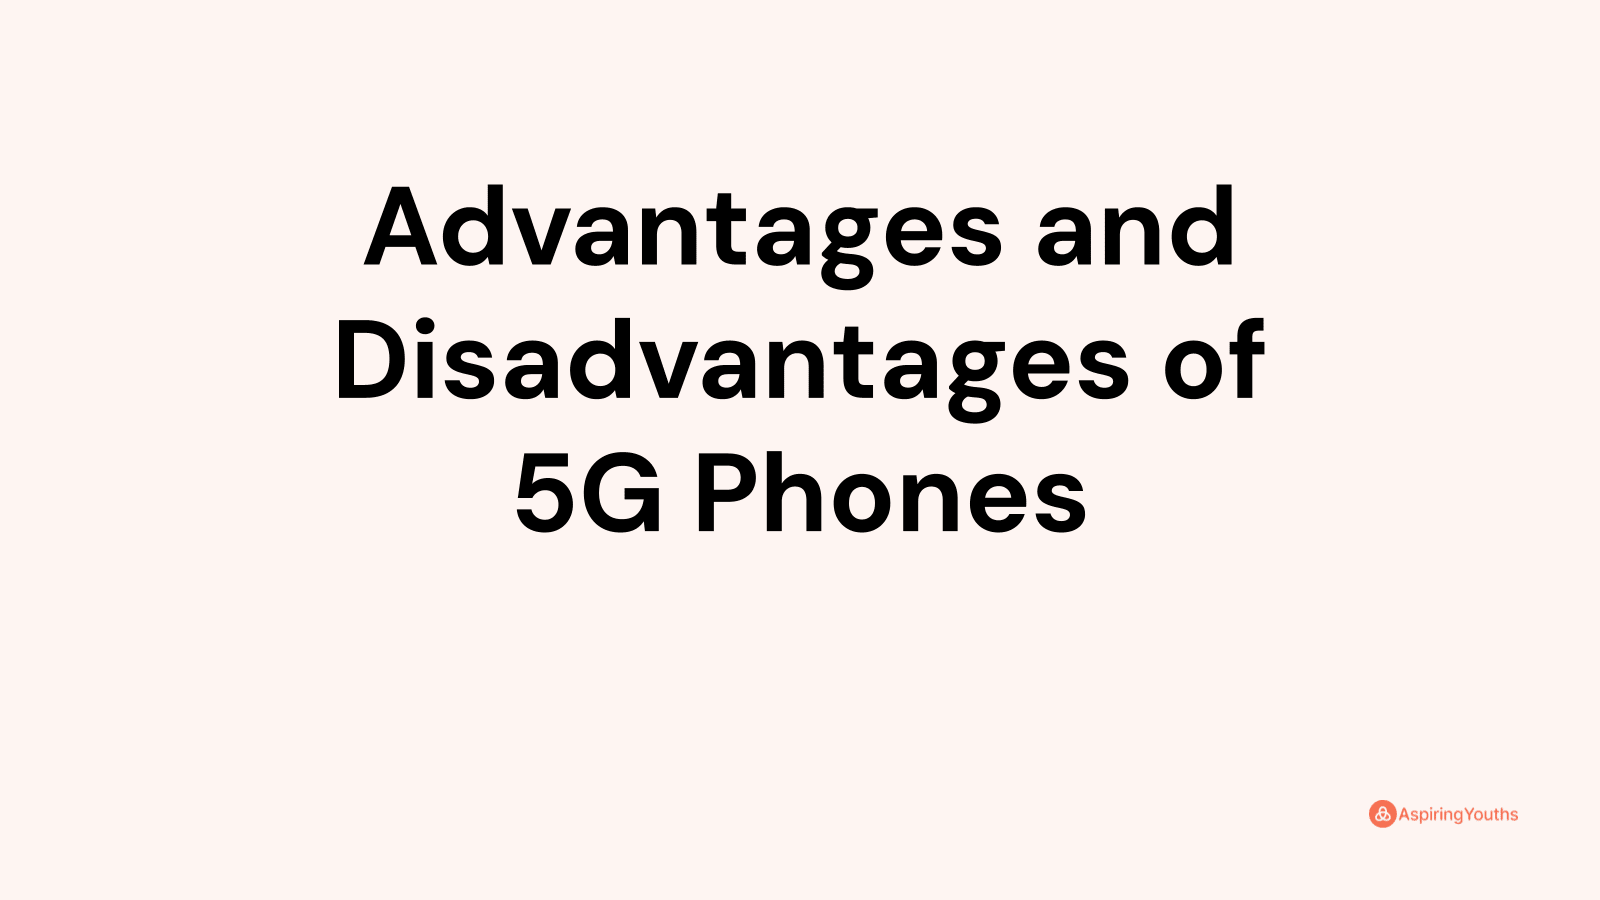 Advantages and disadvantages of 5G Phones